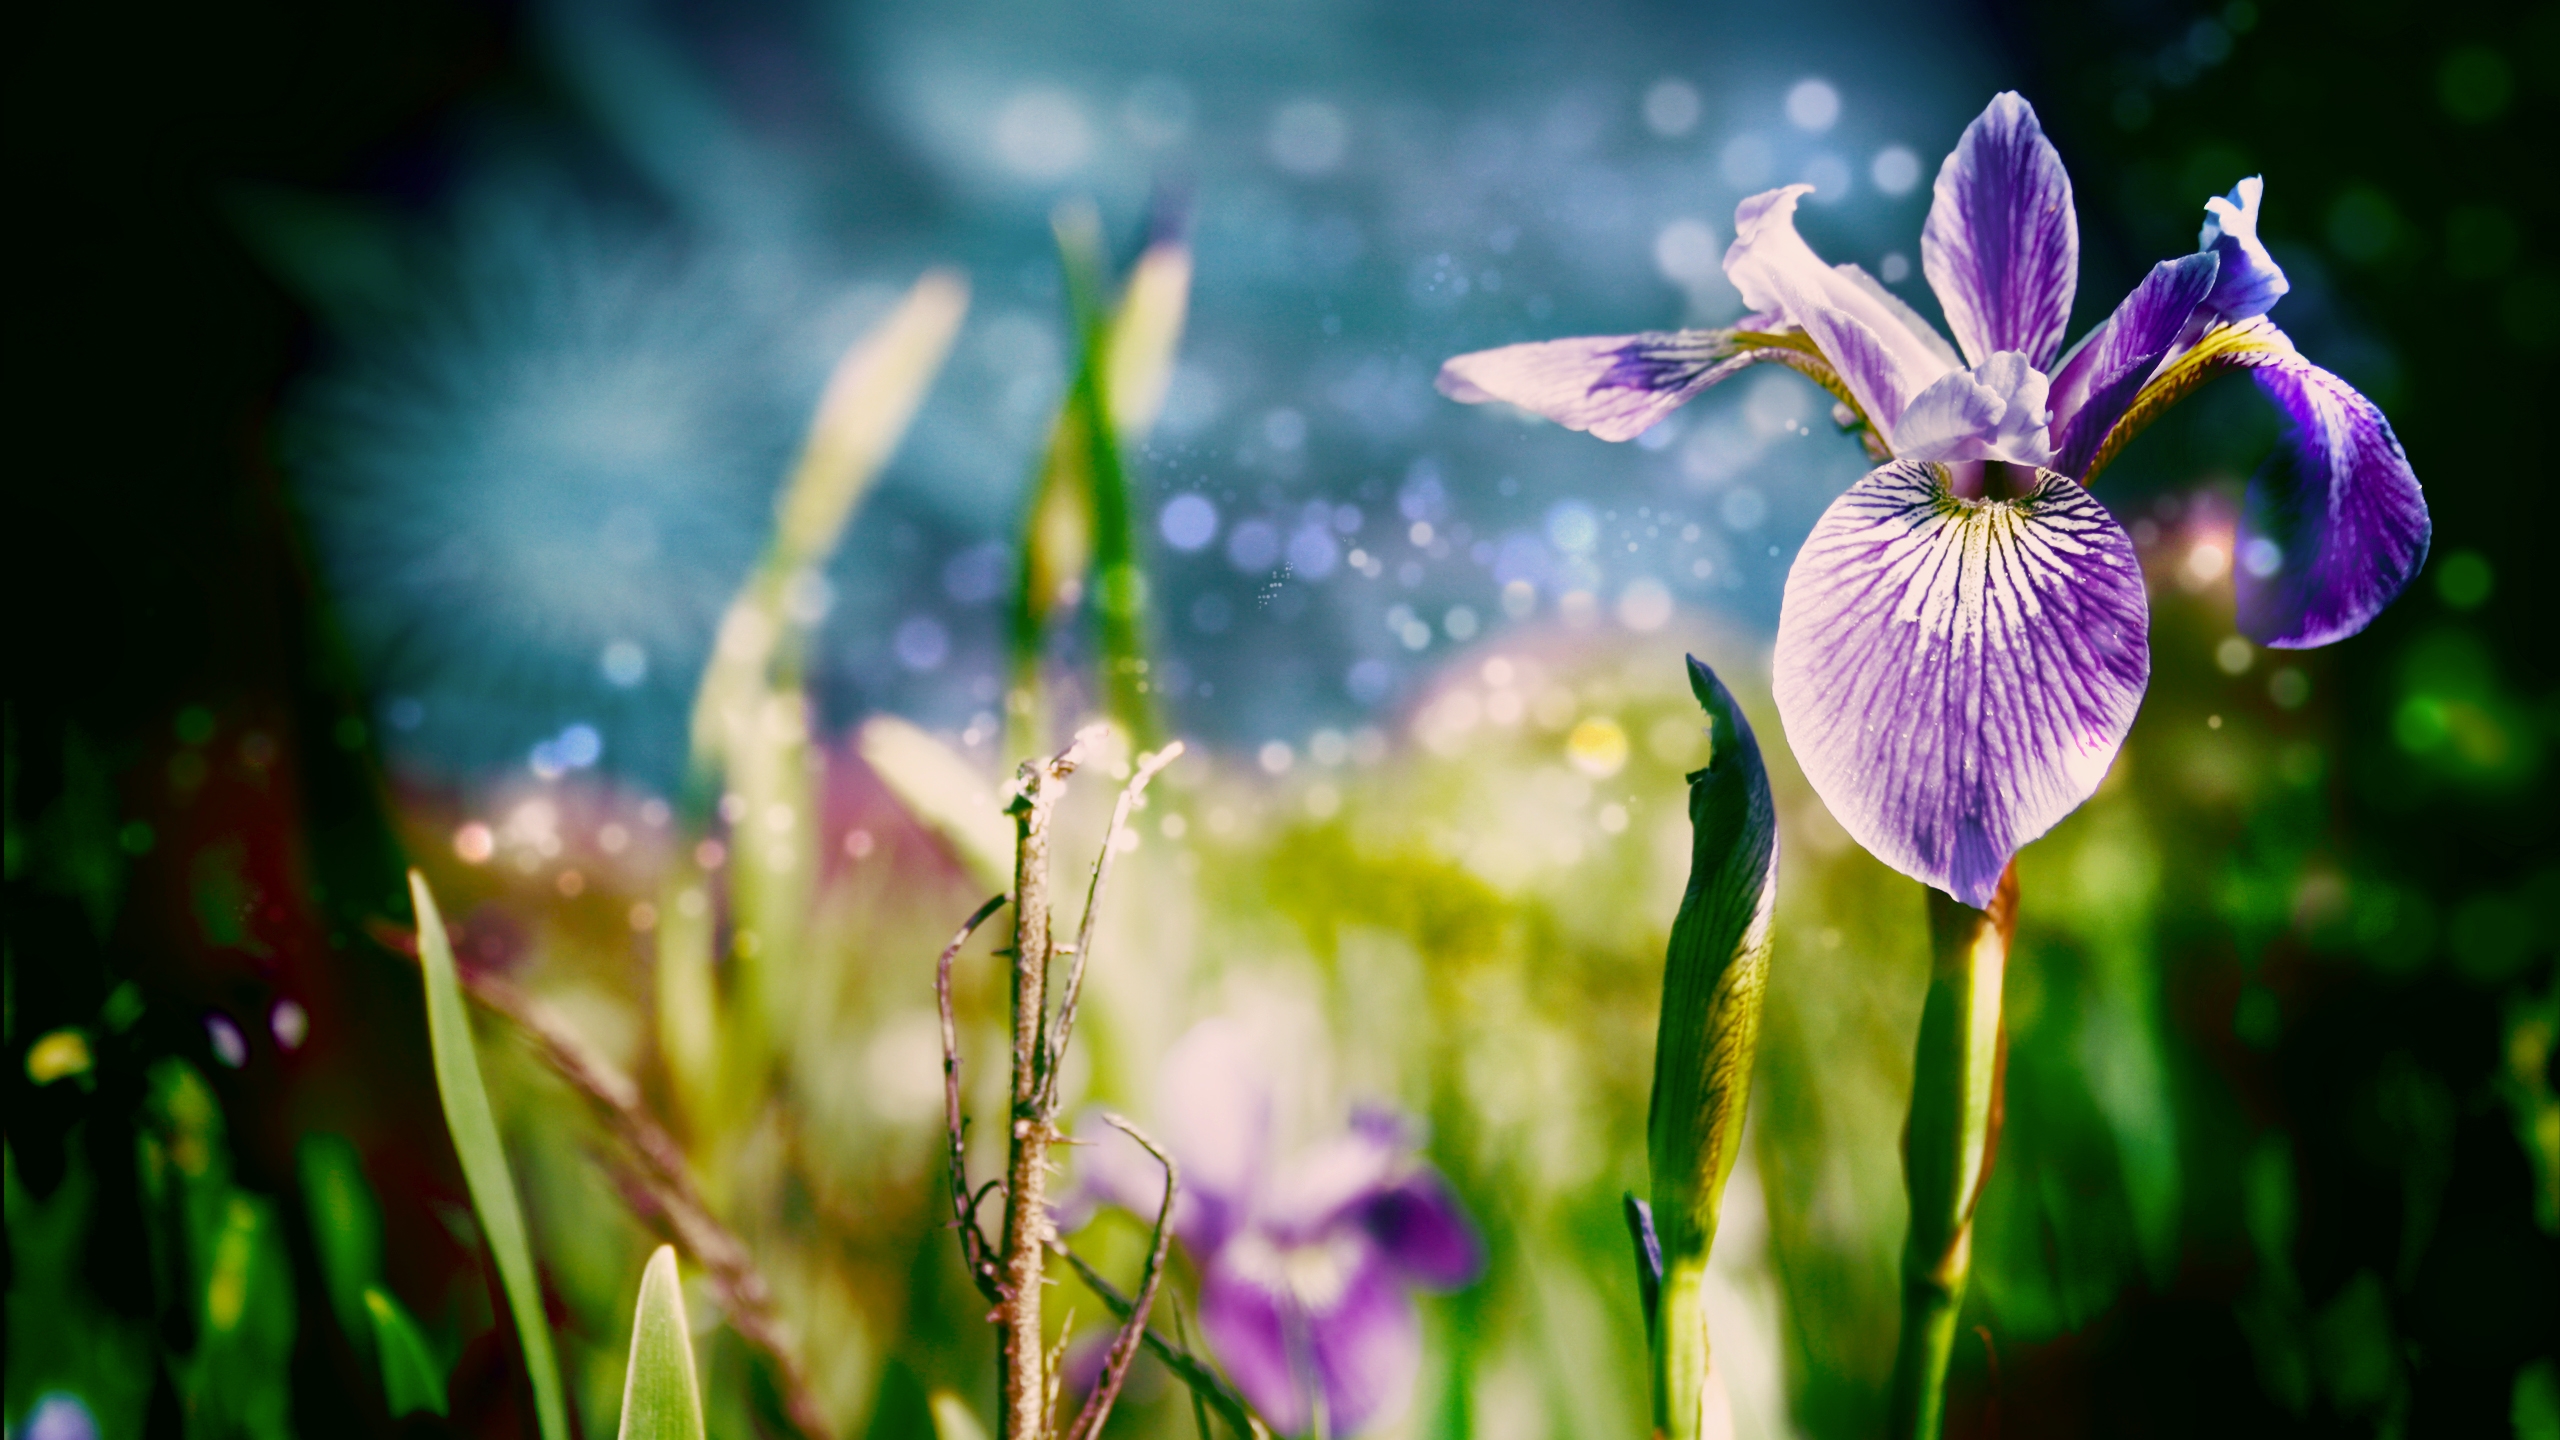 240051 descargar imagen tierra/naturaleza, iris, flor, flores: fondos de pantalla y protectores de pantalla gratis